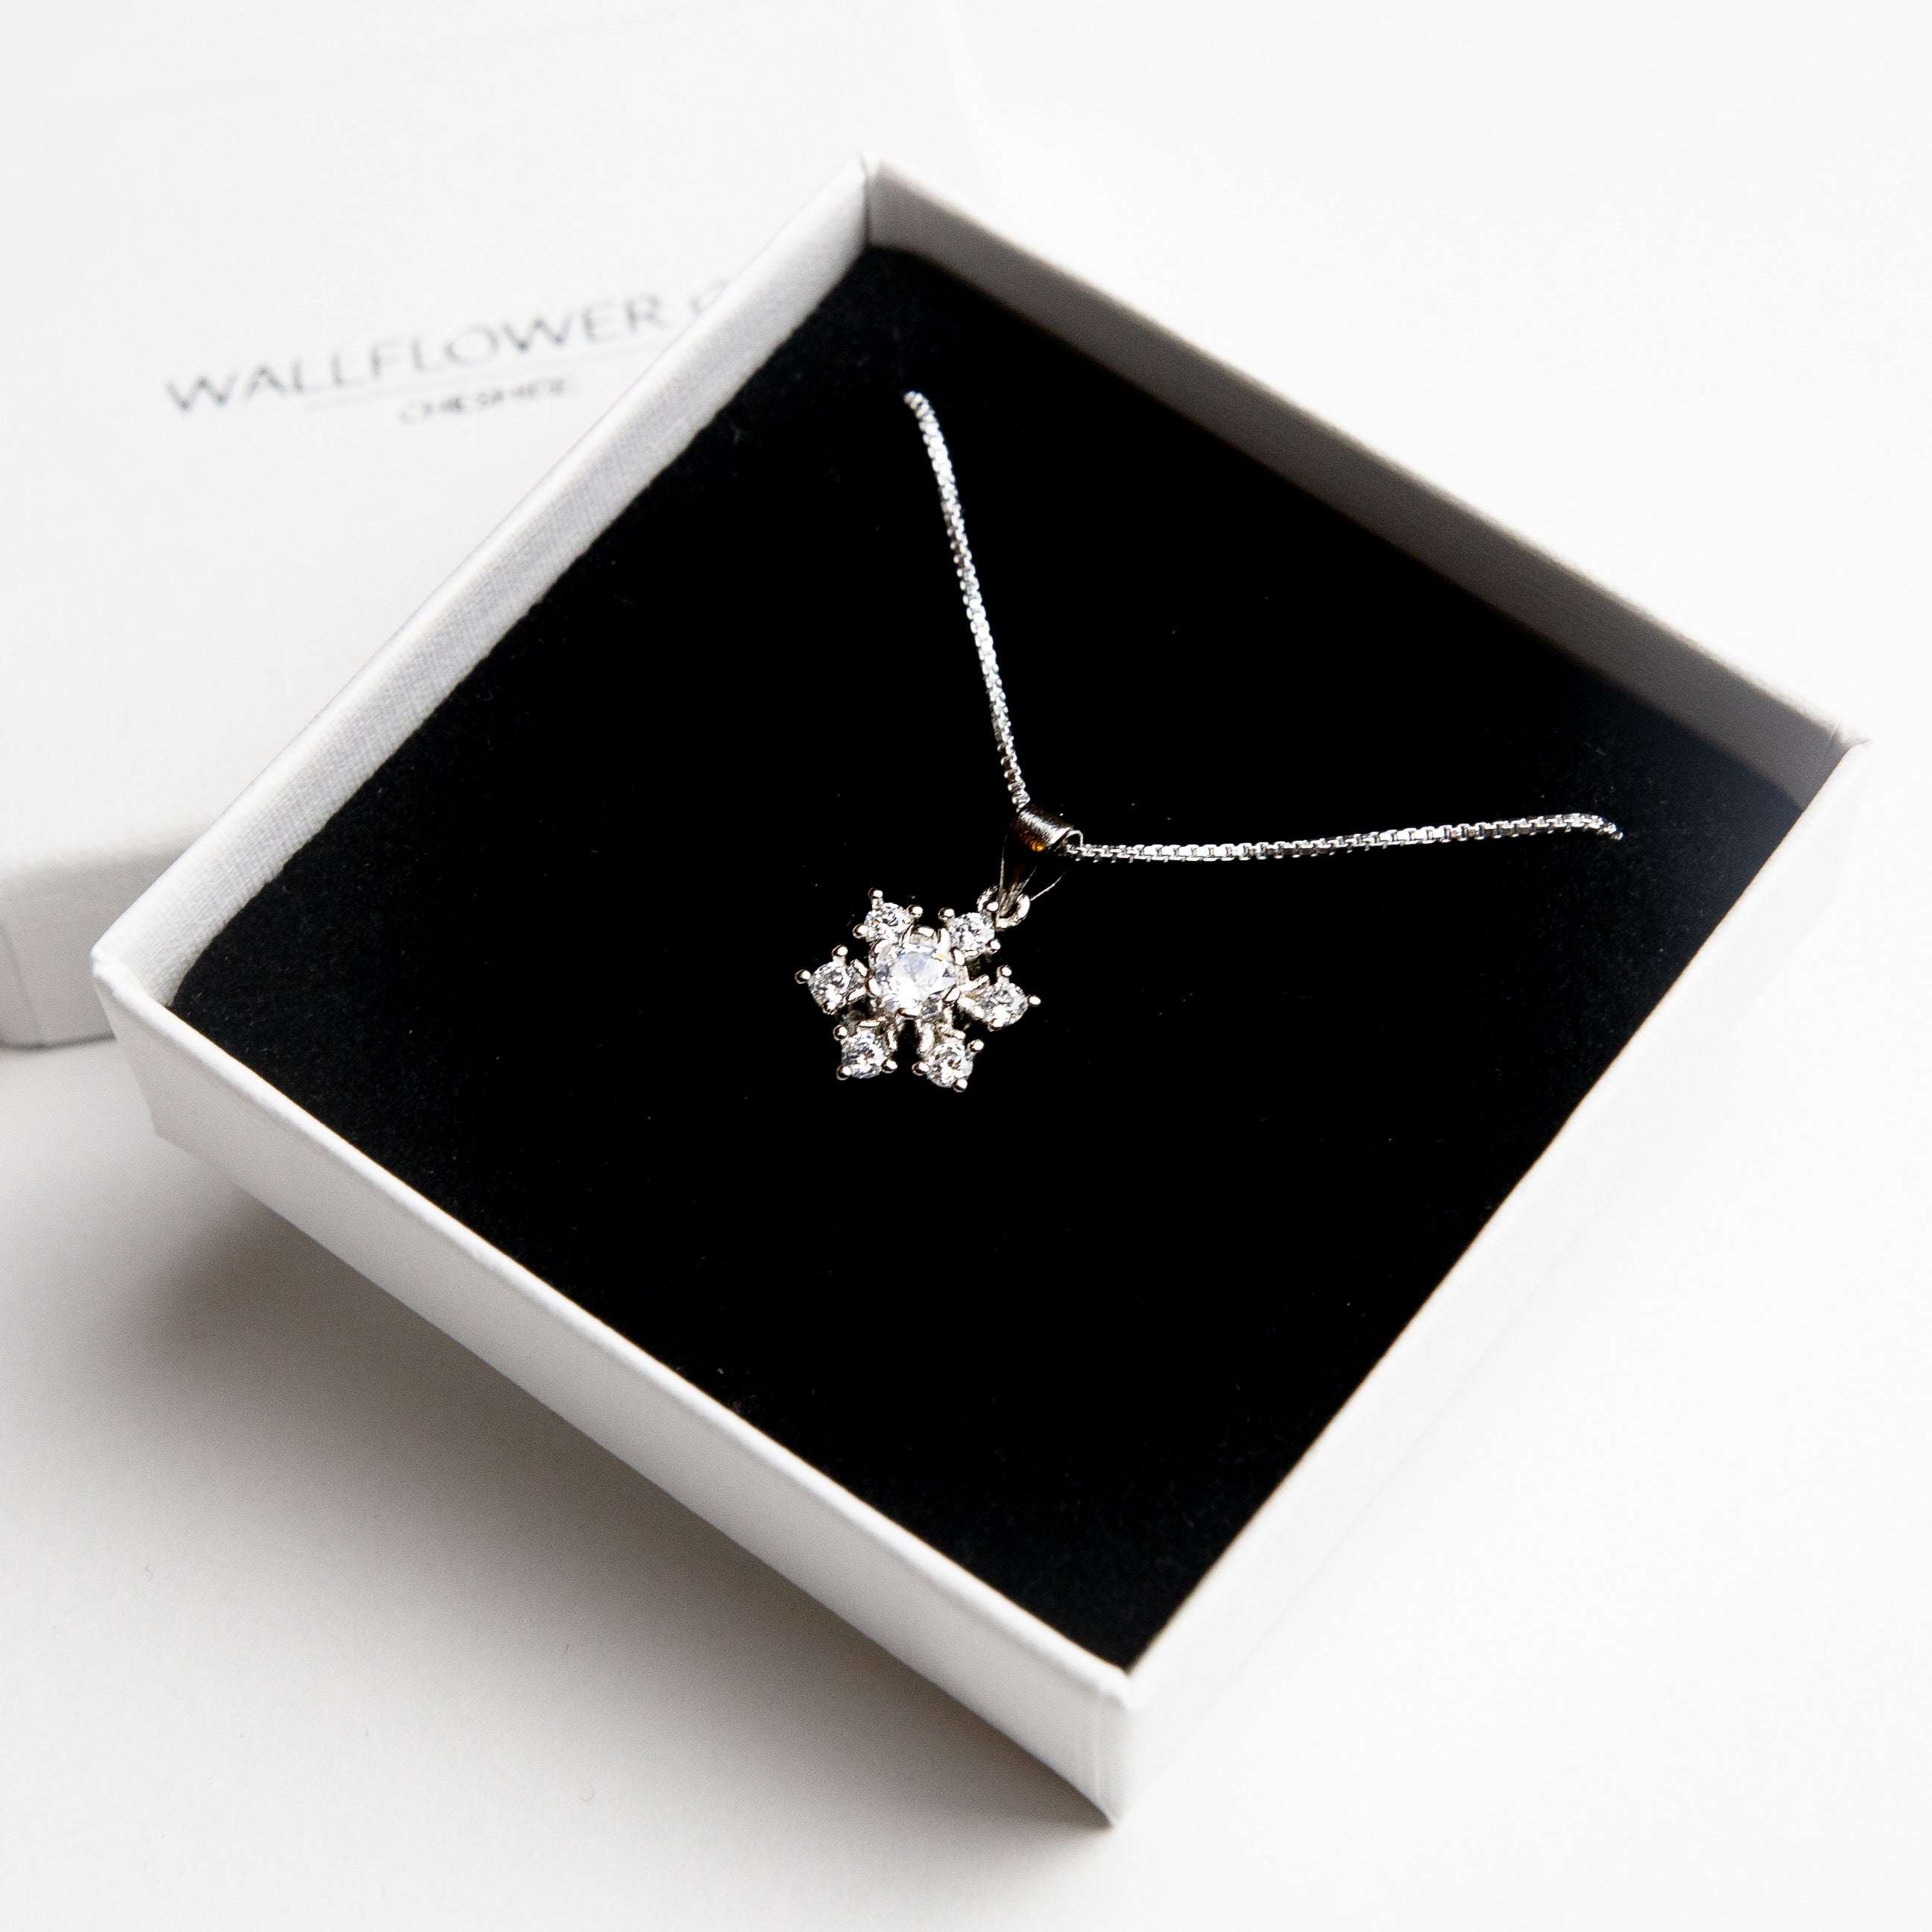 Glitzy Snowflake Necklace - Sterling silver